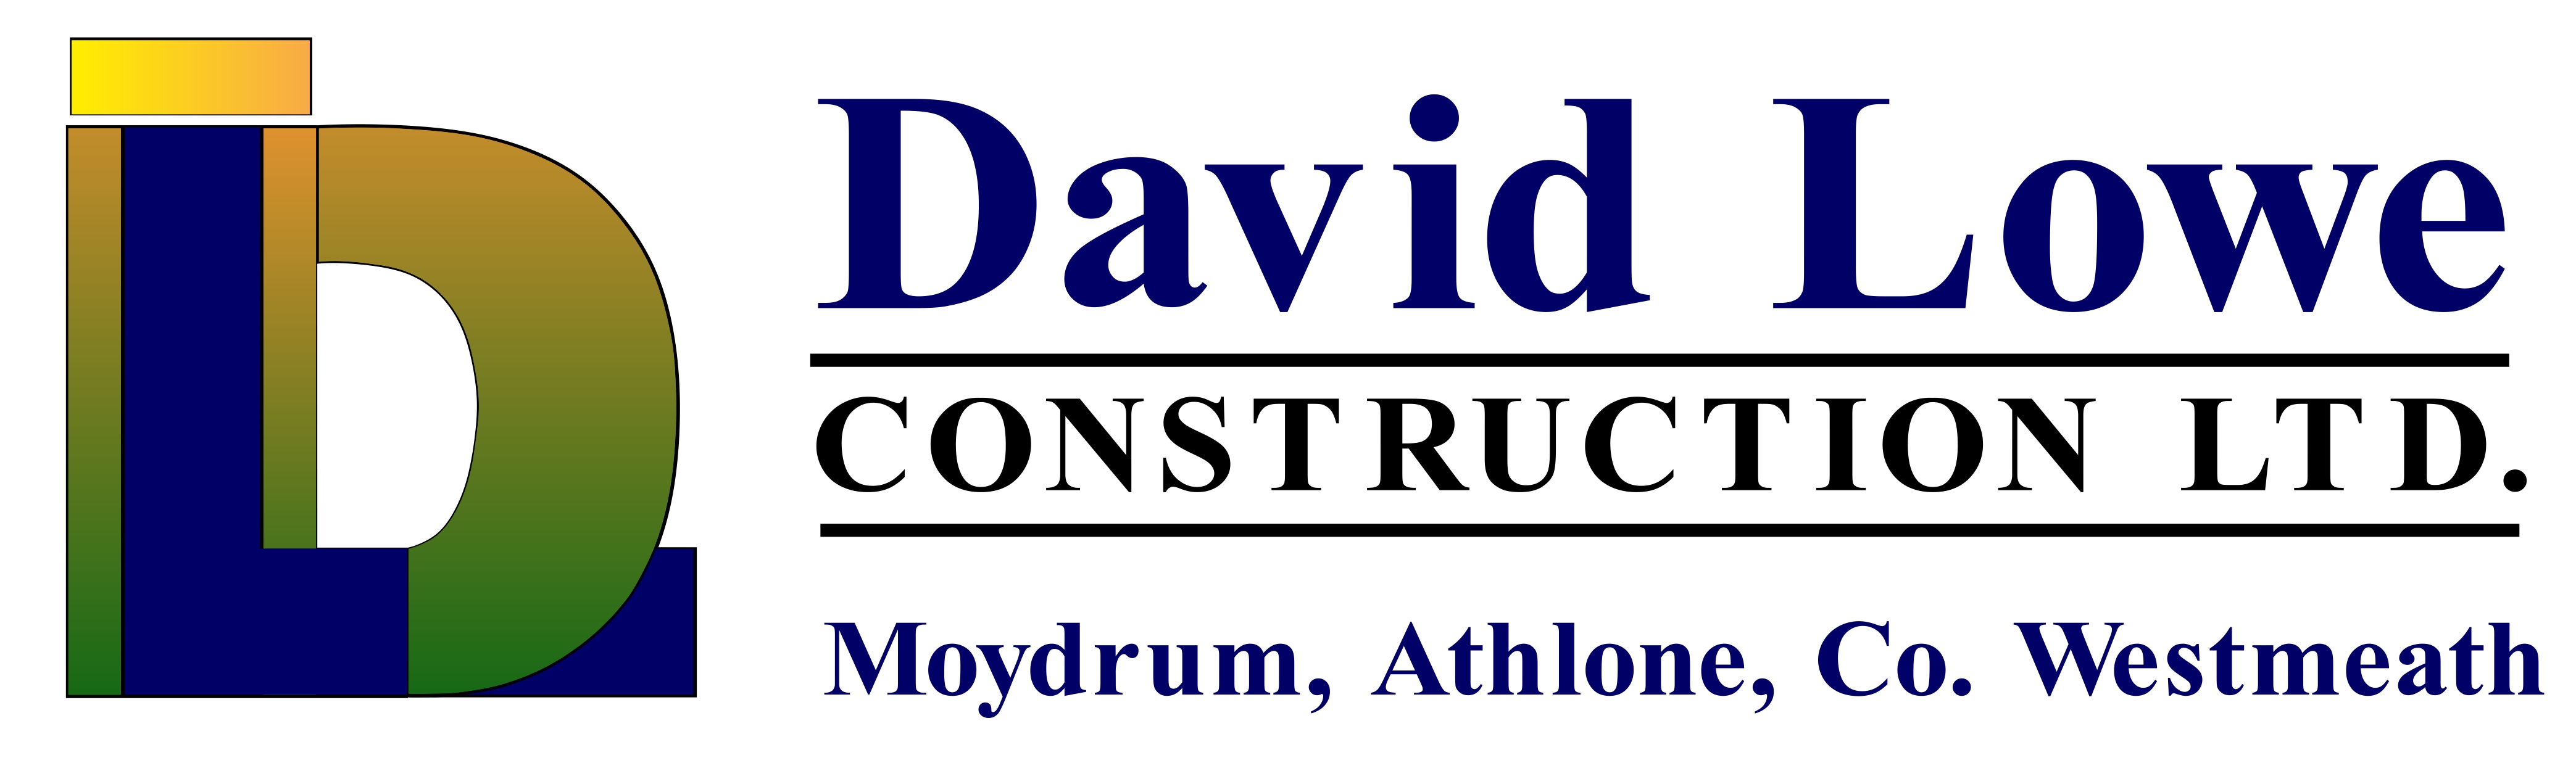 David Lowe Construction